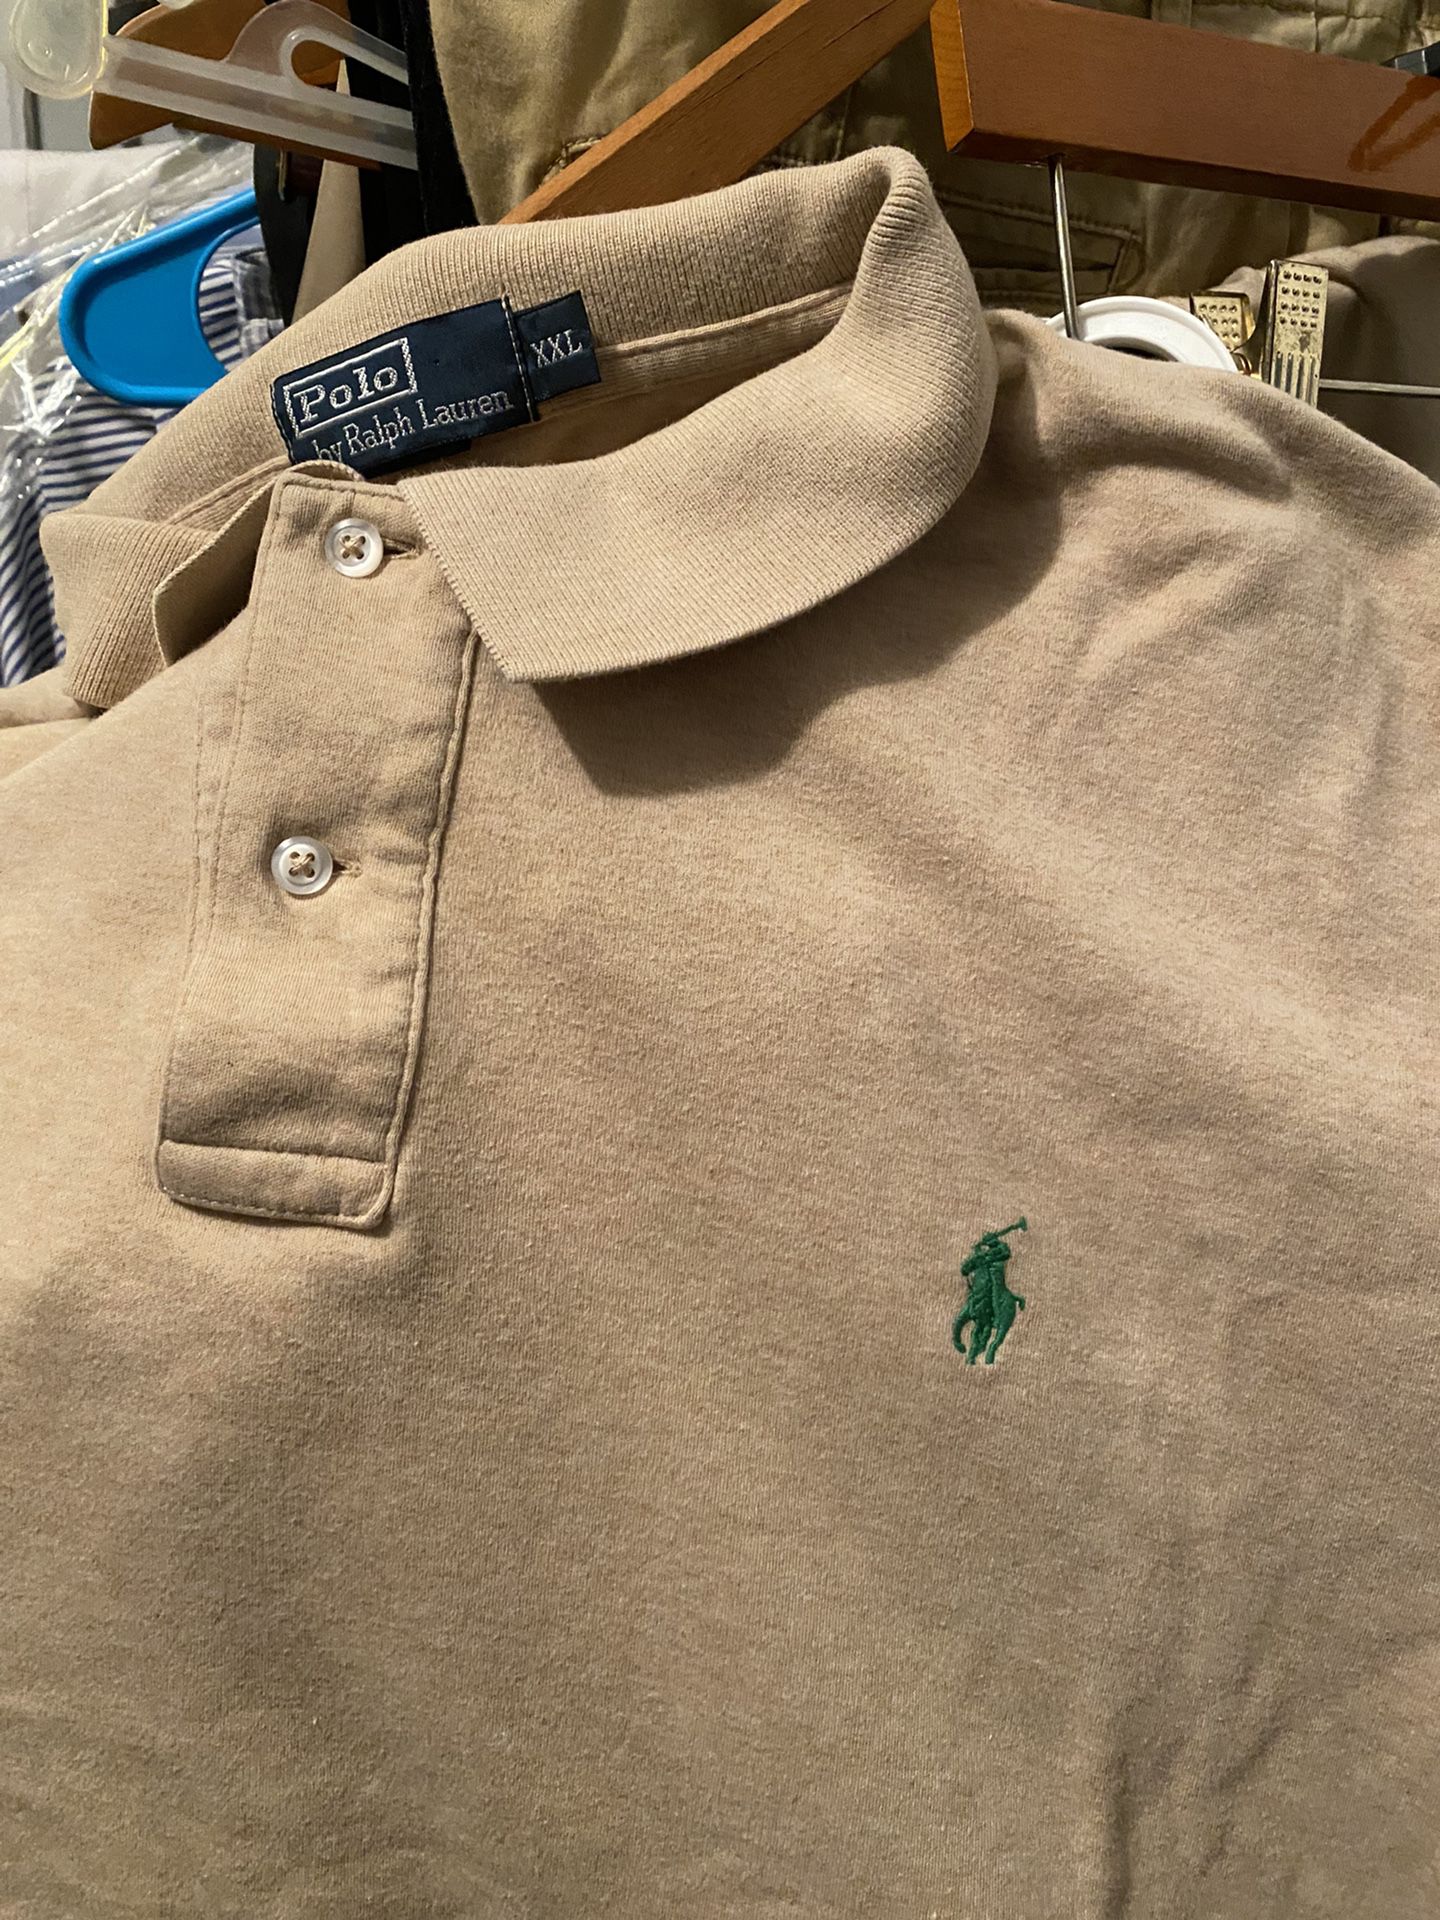 Ralph Lauren Polo Men’s 2XL Shirts - Buy 1 Get 1 Free 